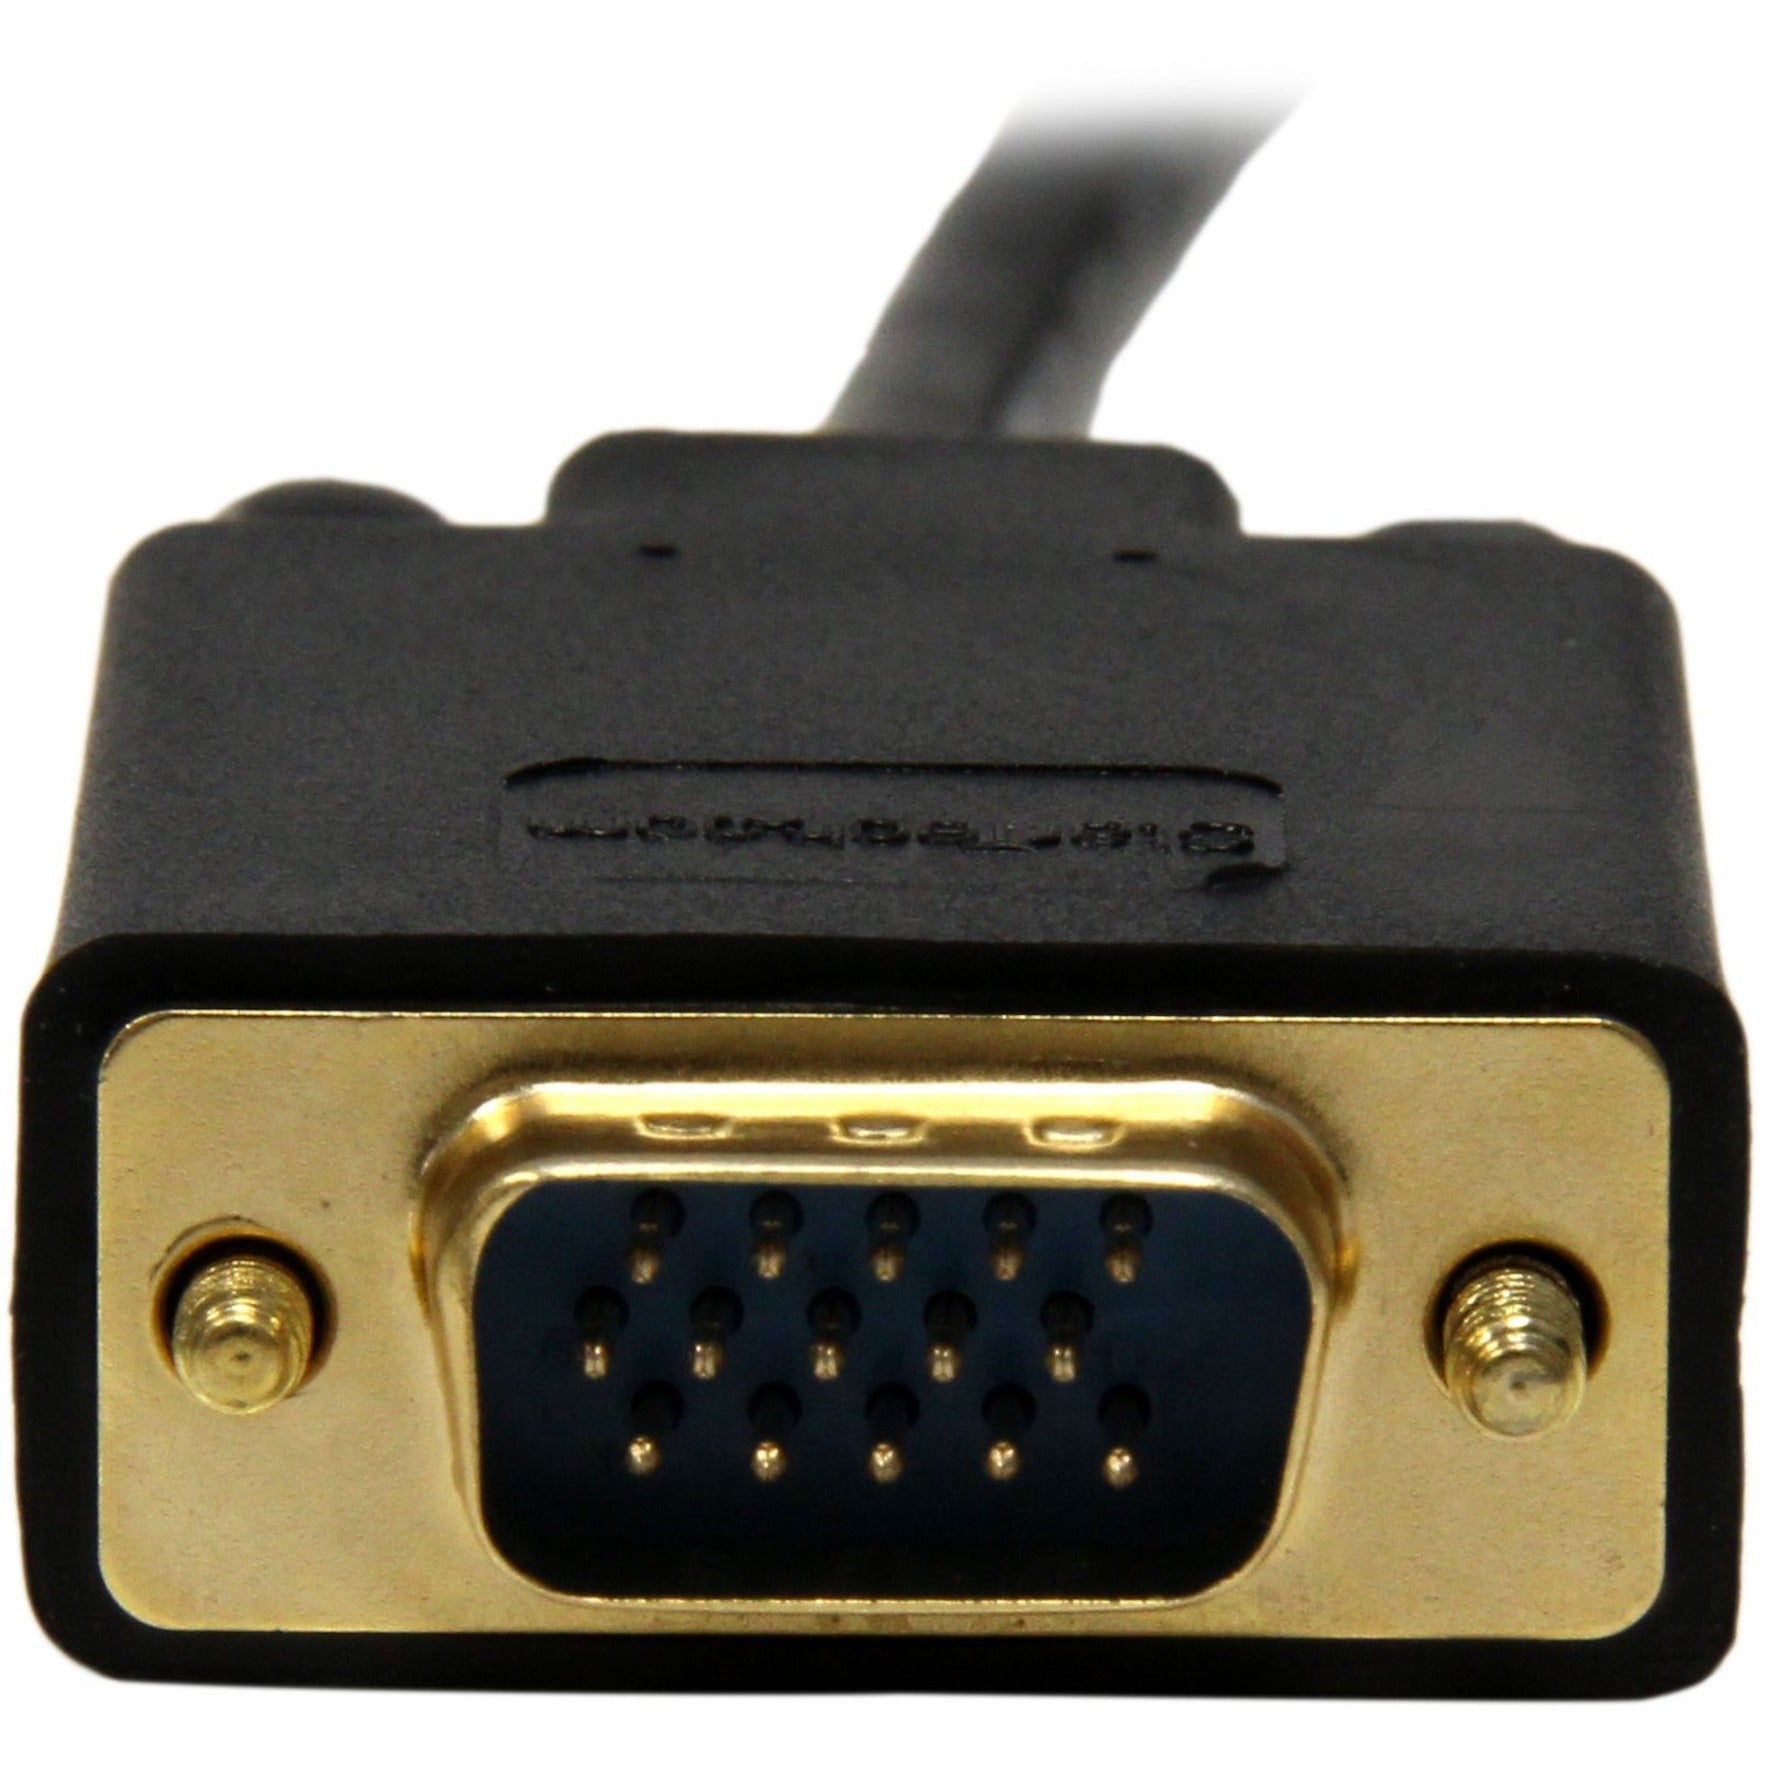 StarTech.com MDP2VGAMM10B Mini DisplayPort to VGA Adapter Cable - Black, 10 ft, 1920x1200